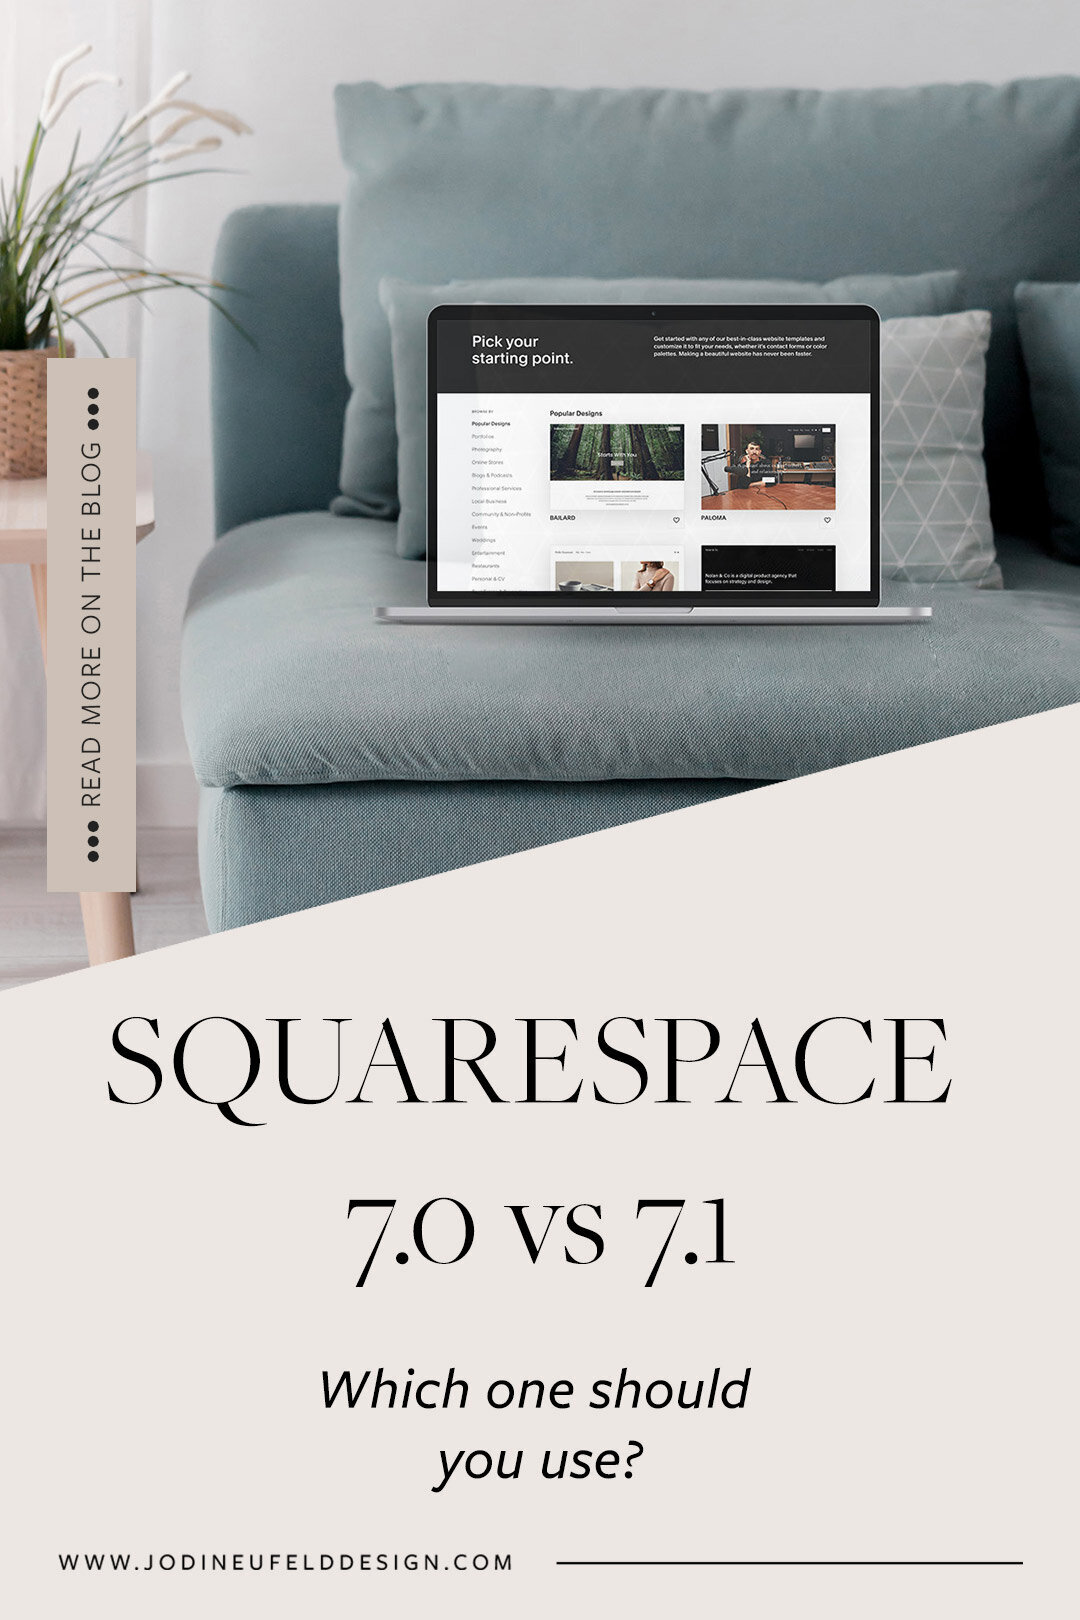 Squarespace 7.1 vs Squarespace 7.0 - which should you use? | Jodi Neufeld Design Squarespace web designer